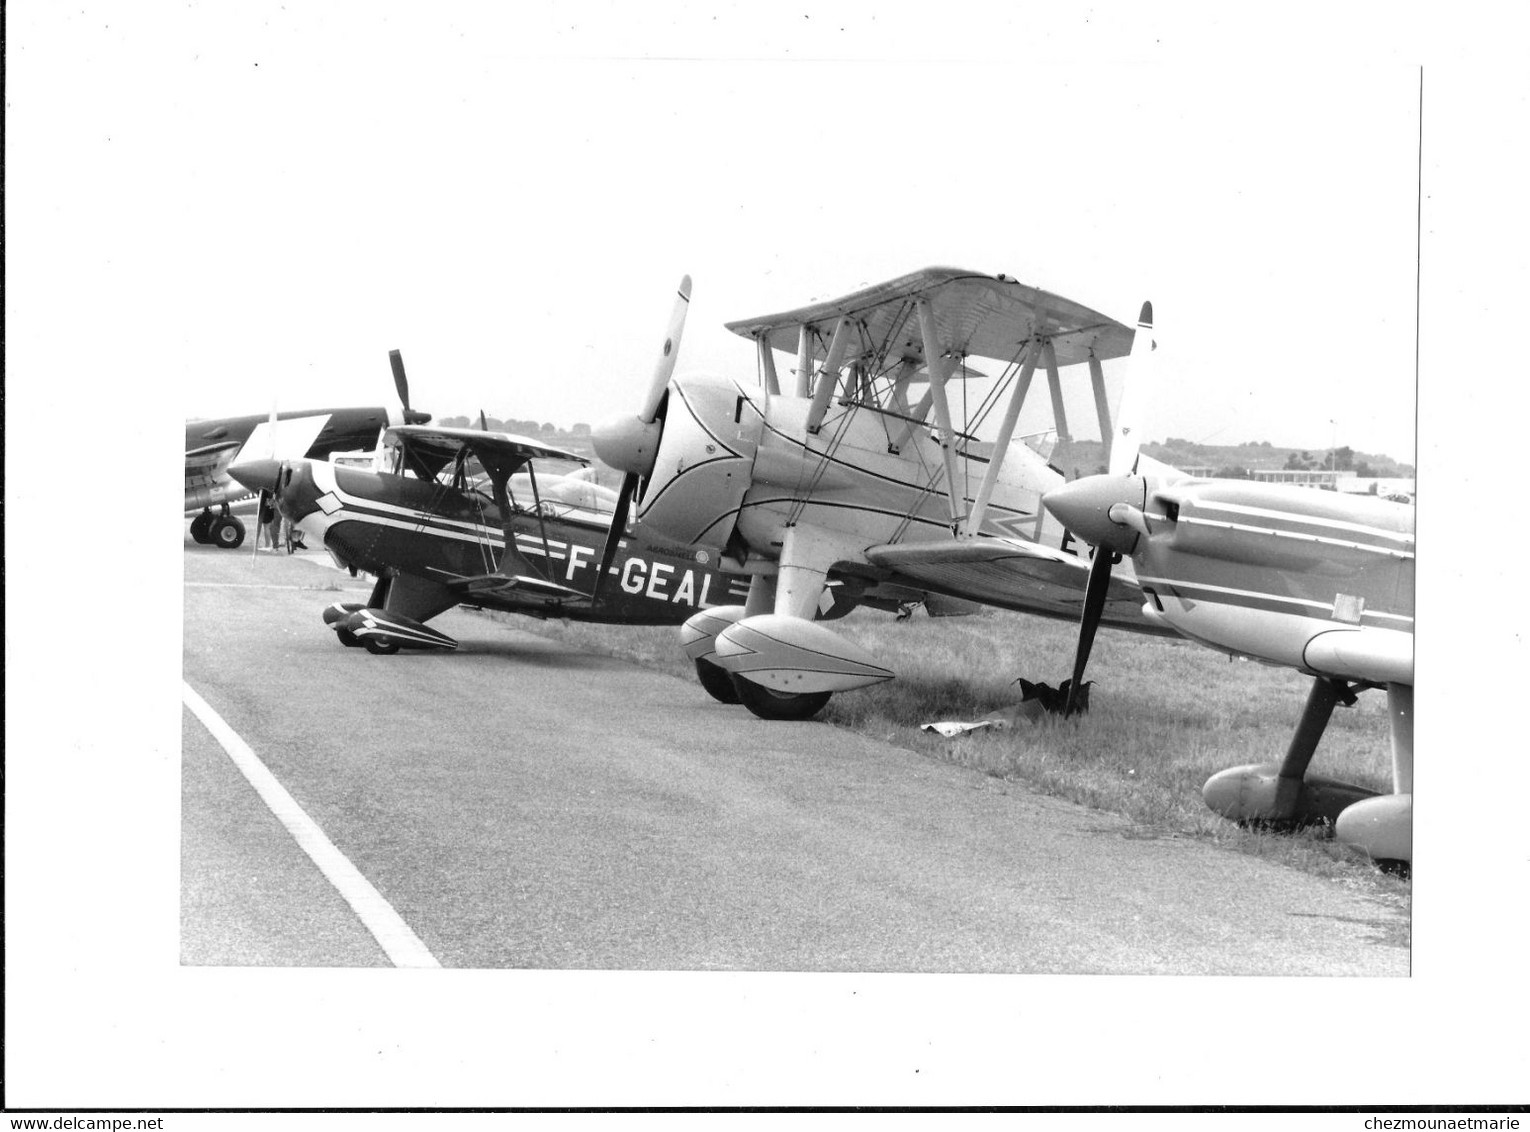 PERPIGNAN - AVIONS DONT F-GEAL PITTS S-2B DE CHRISTEN INDUSTRIES - MEETING AERIEN - PHOTO 24*18 CM DAVIAU 1994 - Aviation